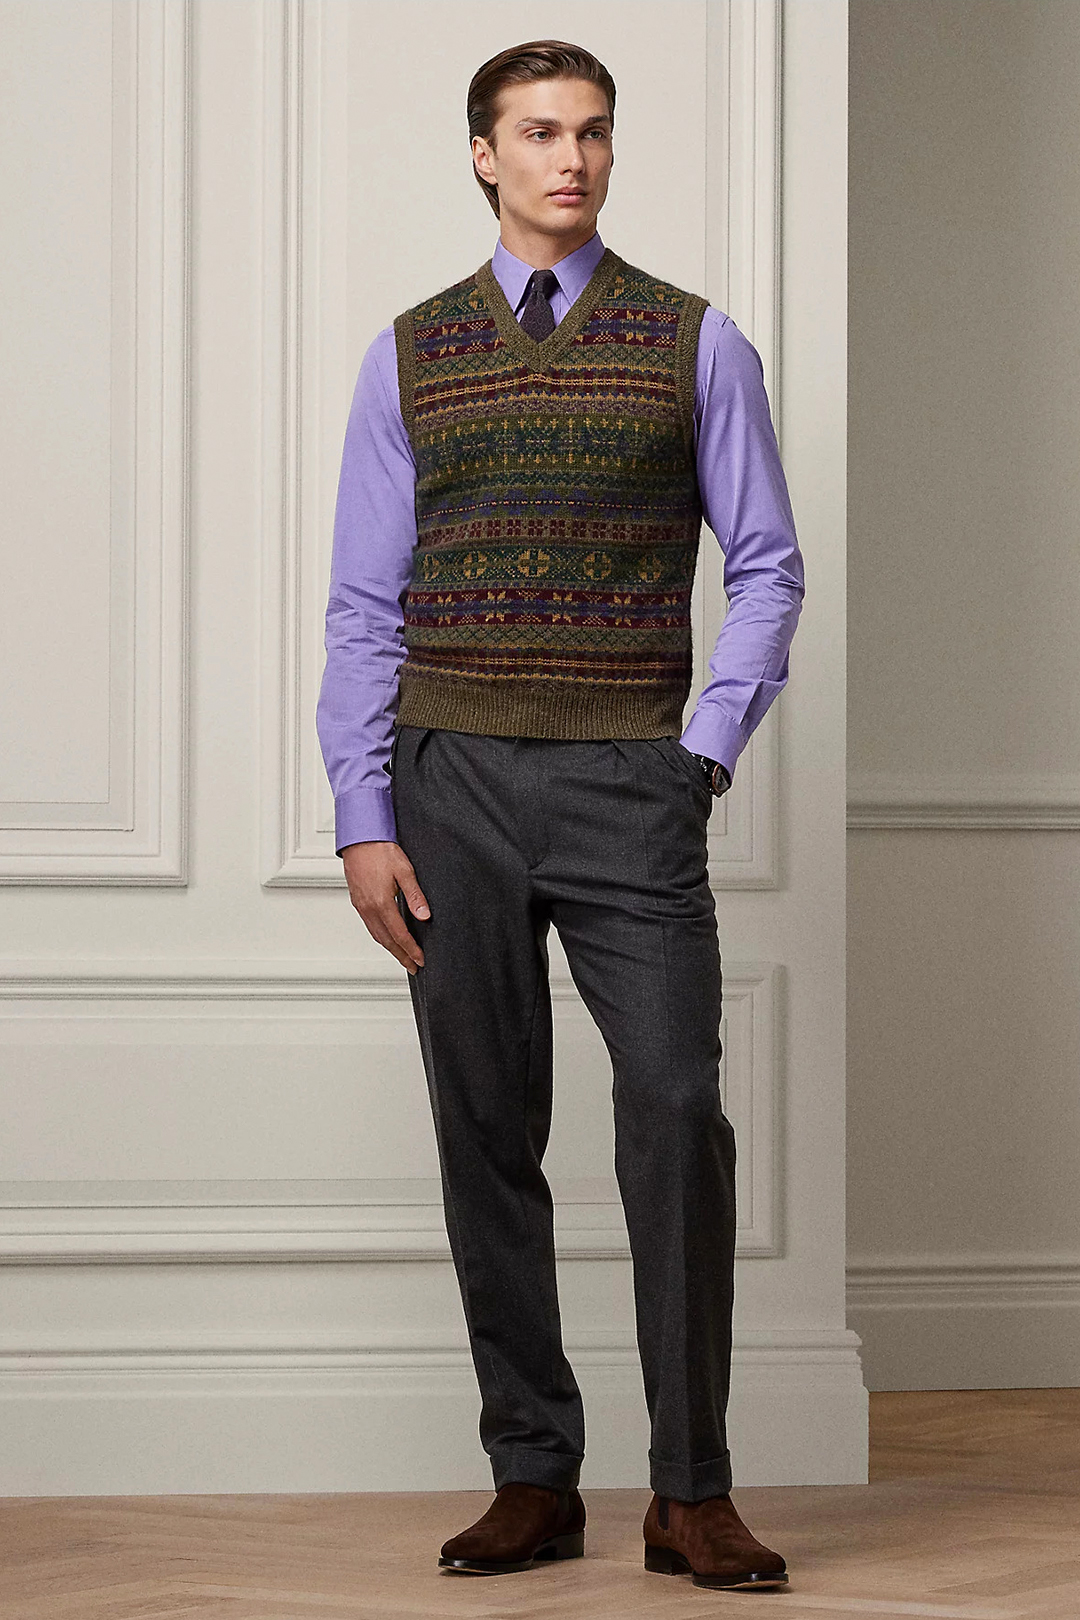 Multi-color sweater vest, violet dress shirt, violet tie, charcoal dress pants and brown suede Chelsea boots outfit